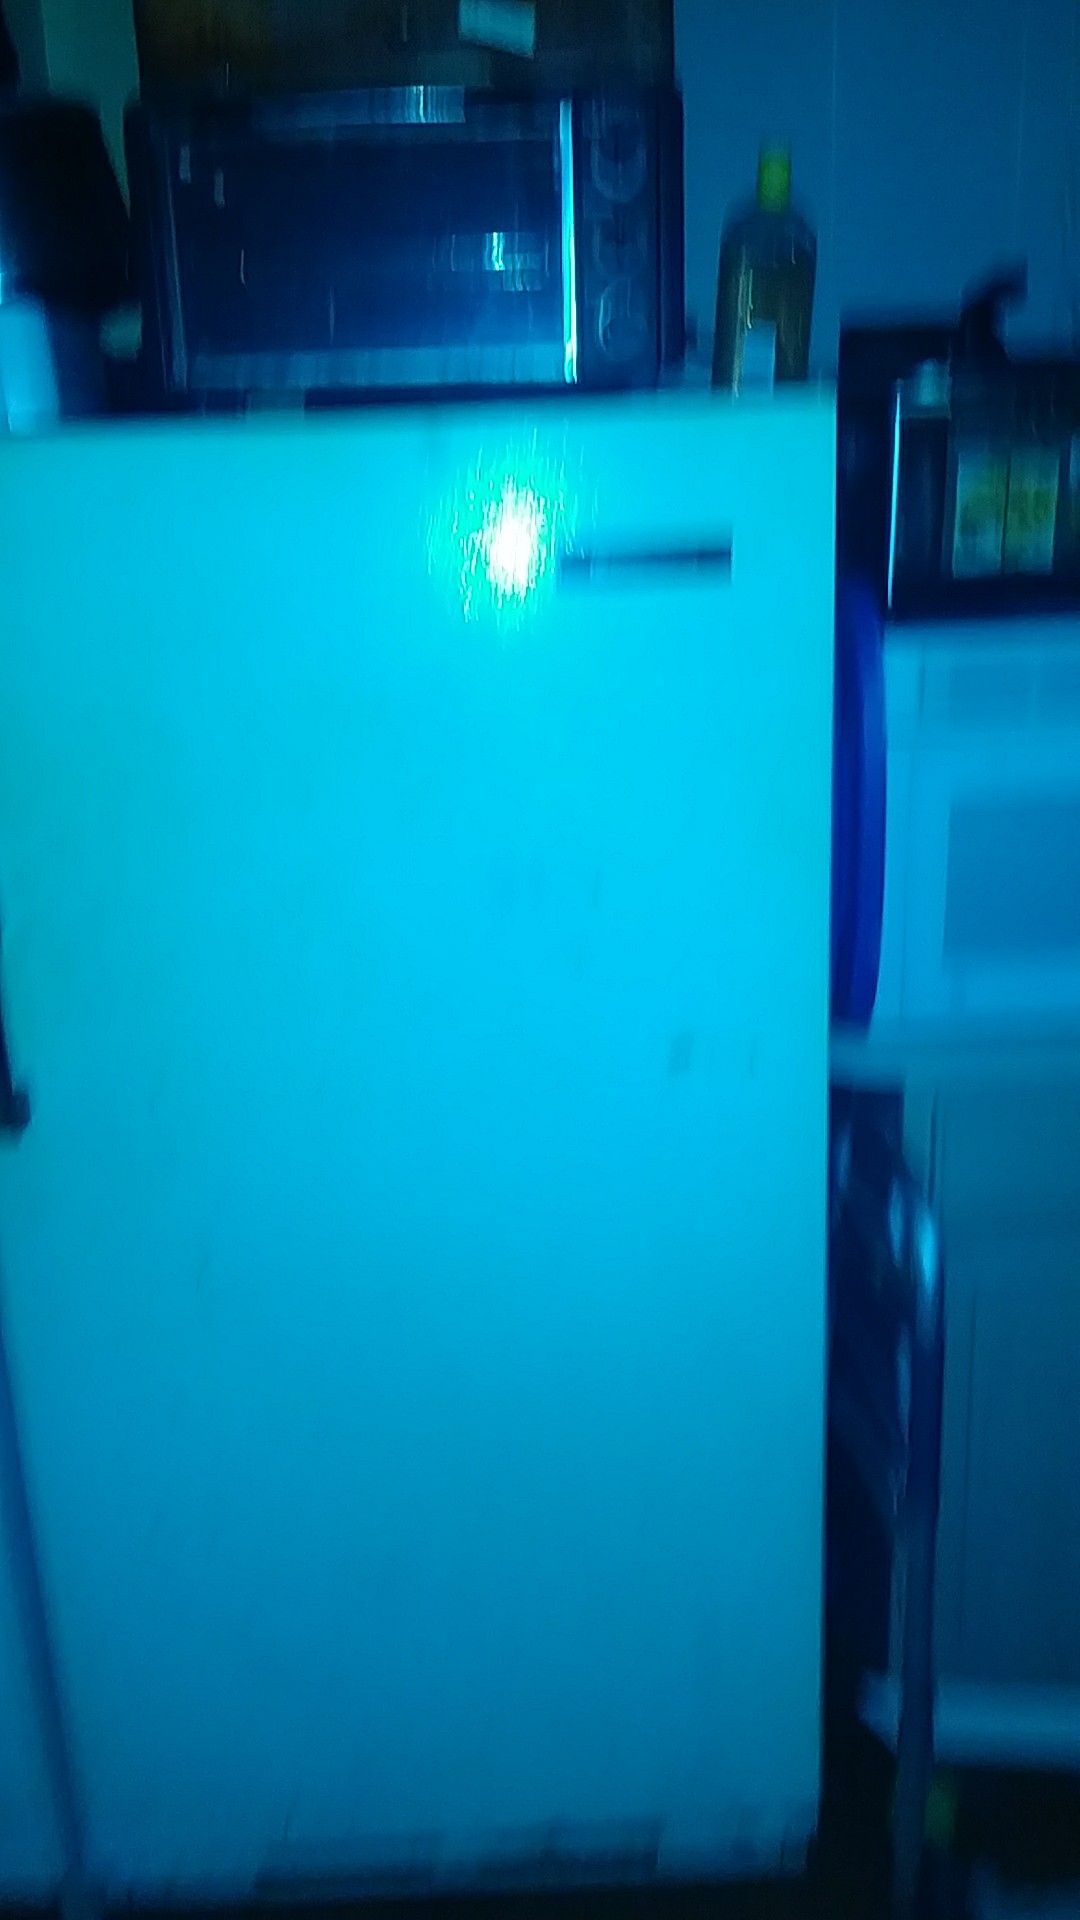 An upright freezer